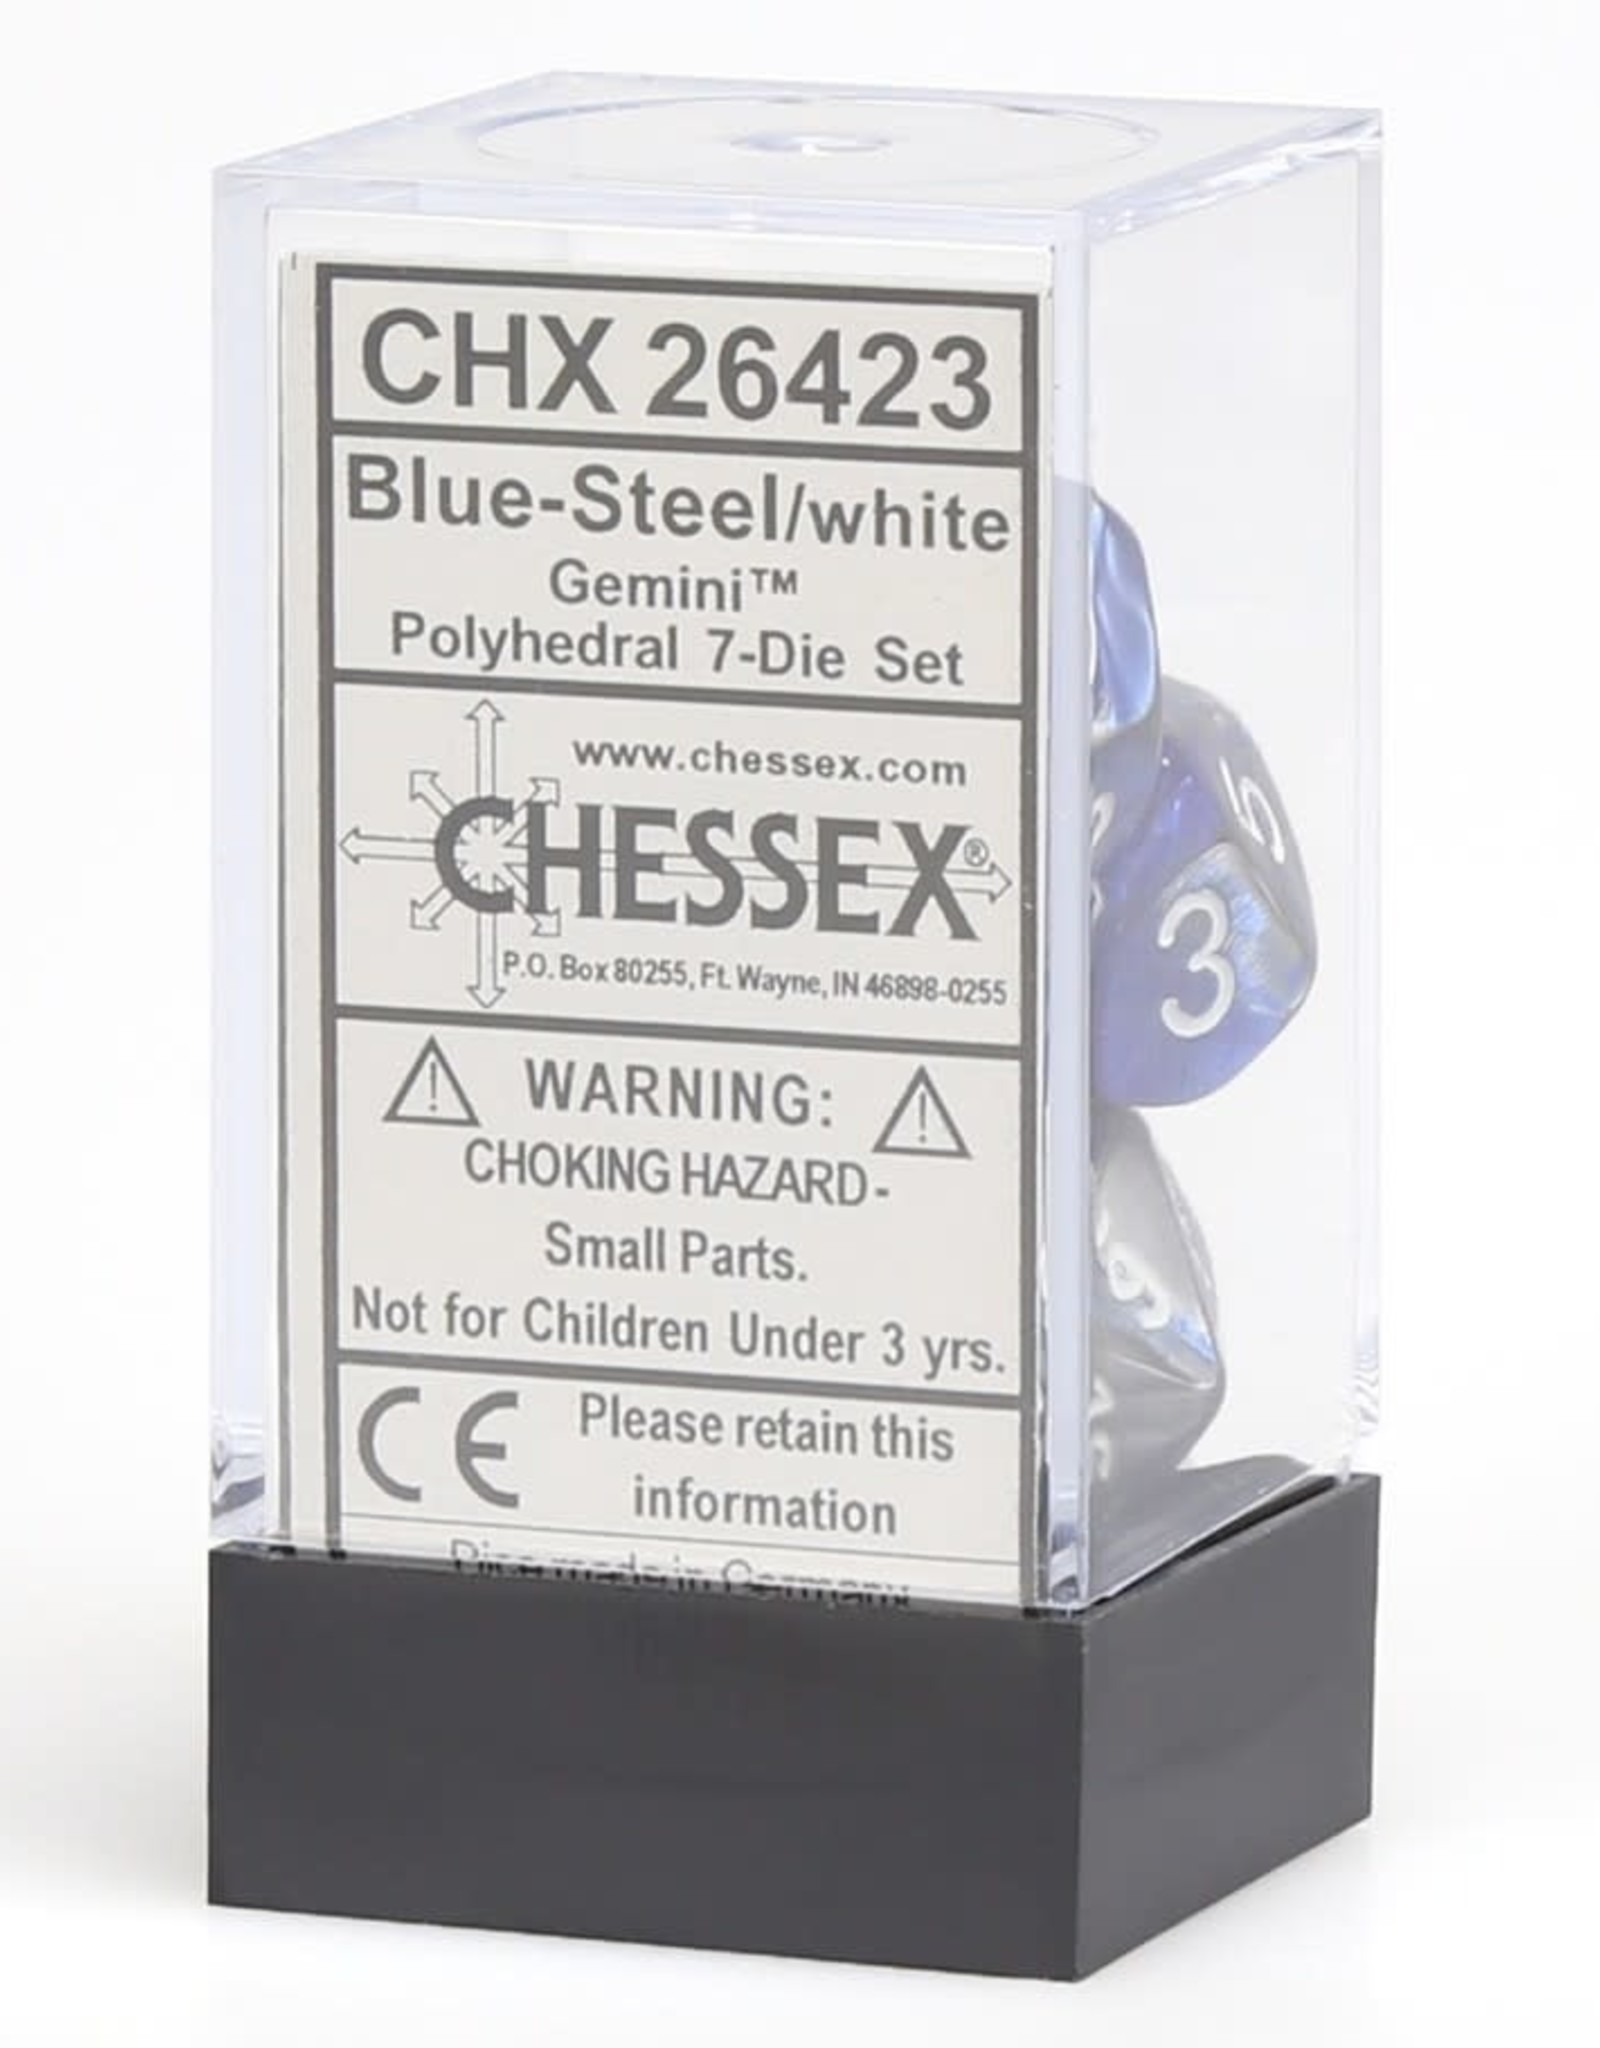 Chessex CHX Gemini Dice: Blue-Steel/White Poly 7-Die Set 26423